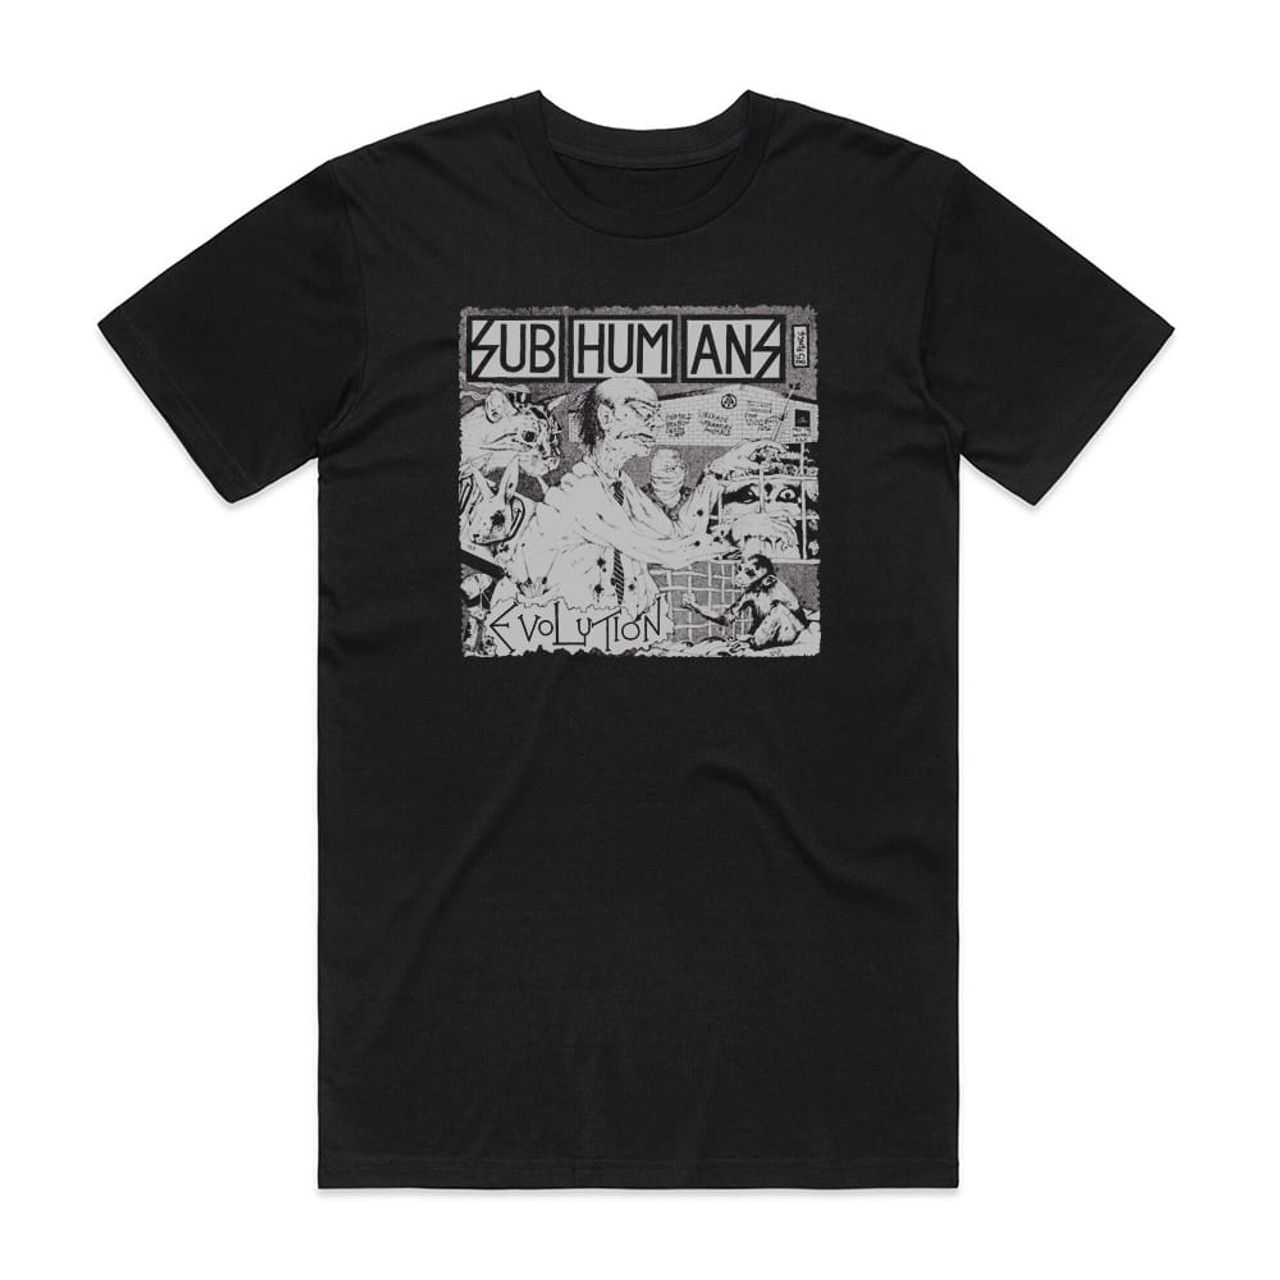 Subhumans Evolution Album Cover T-Shirt Black